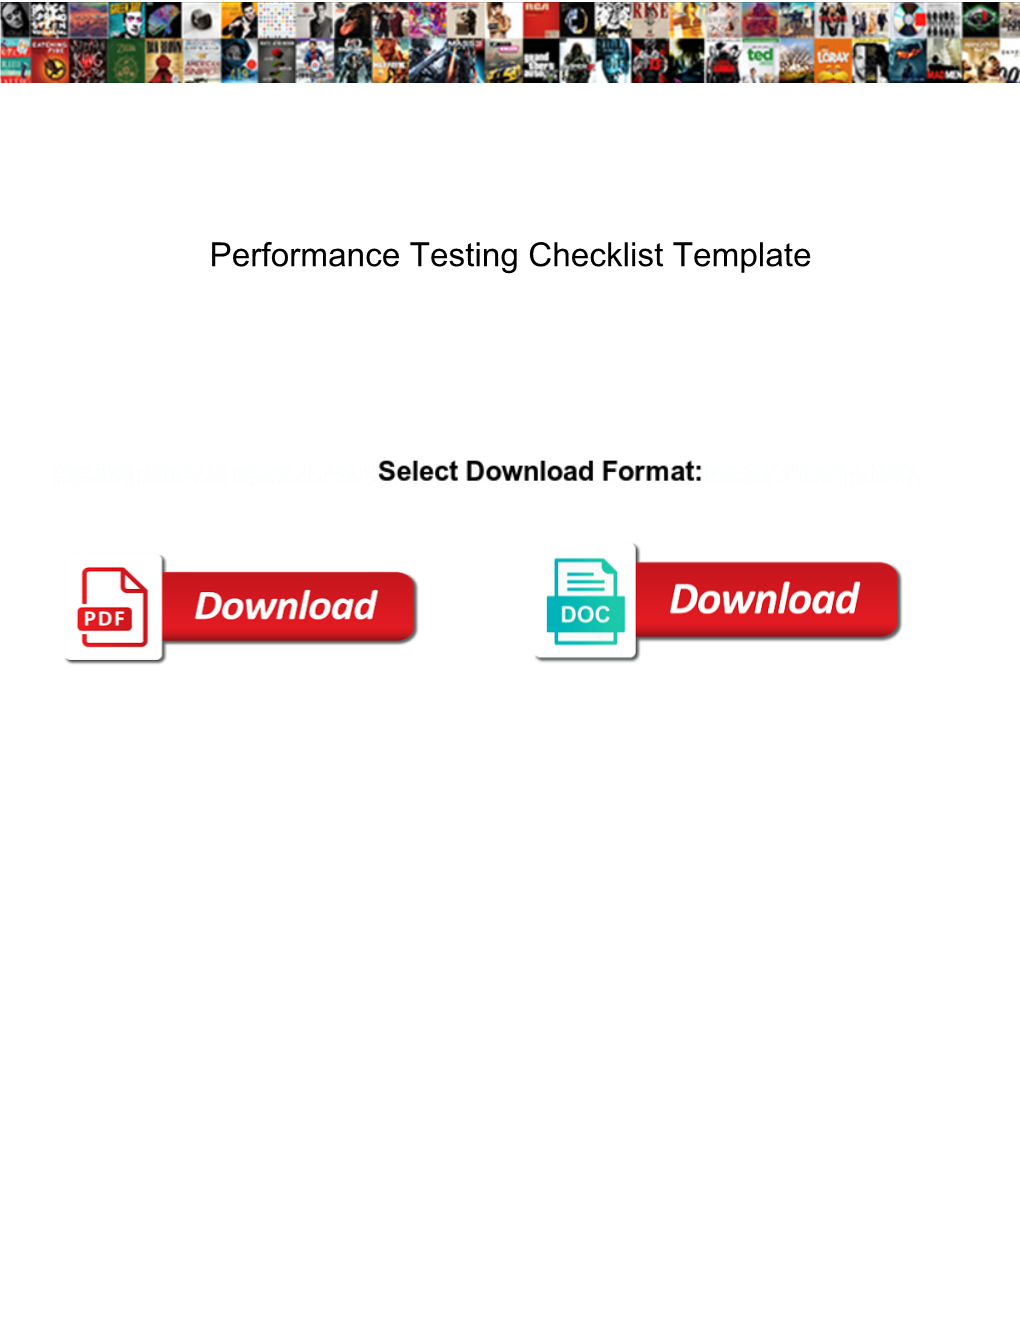 Performance Testing Checklist Template